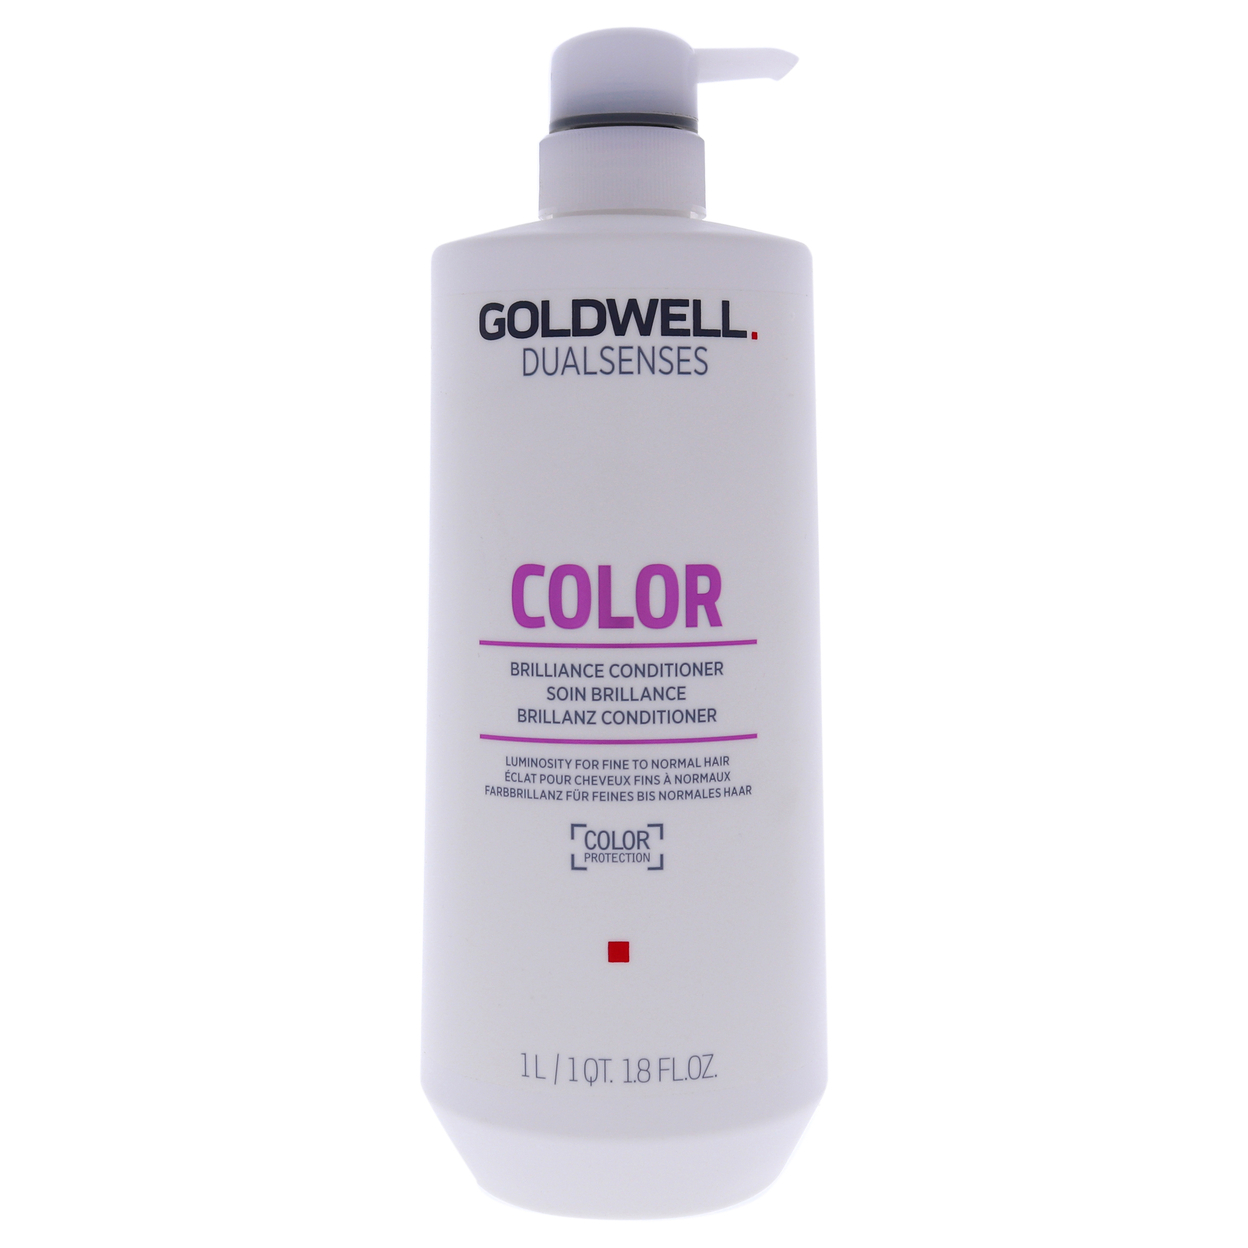 Goldwell Unisex HAIRCARE Dualsenses Color Conditioner 34 Oz